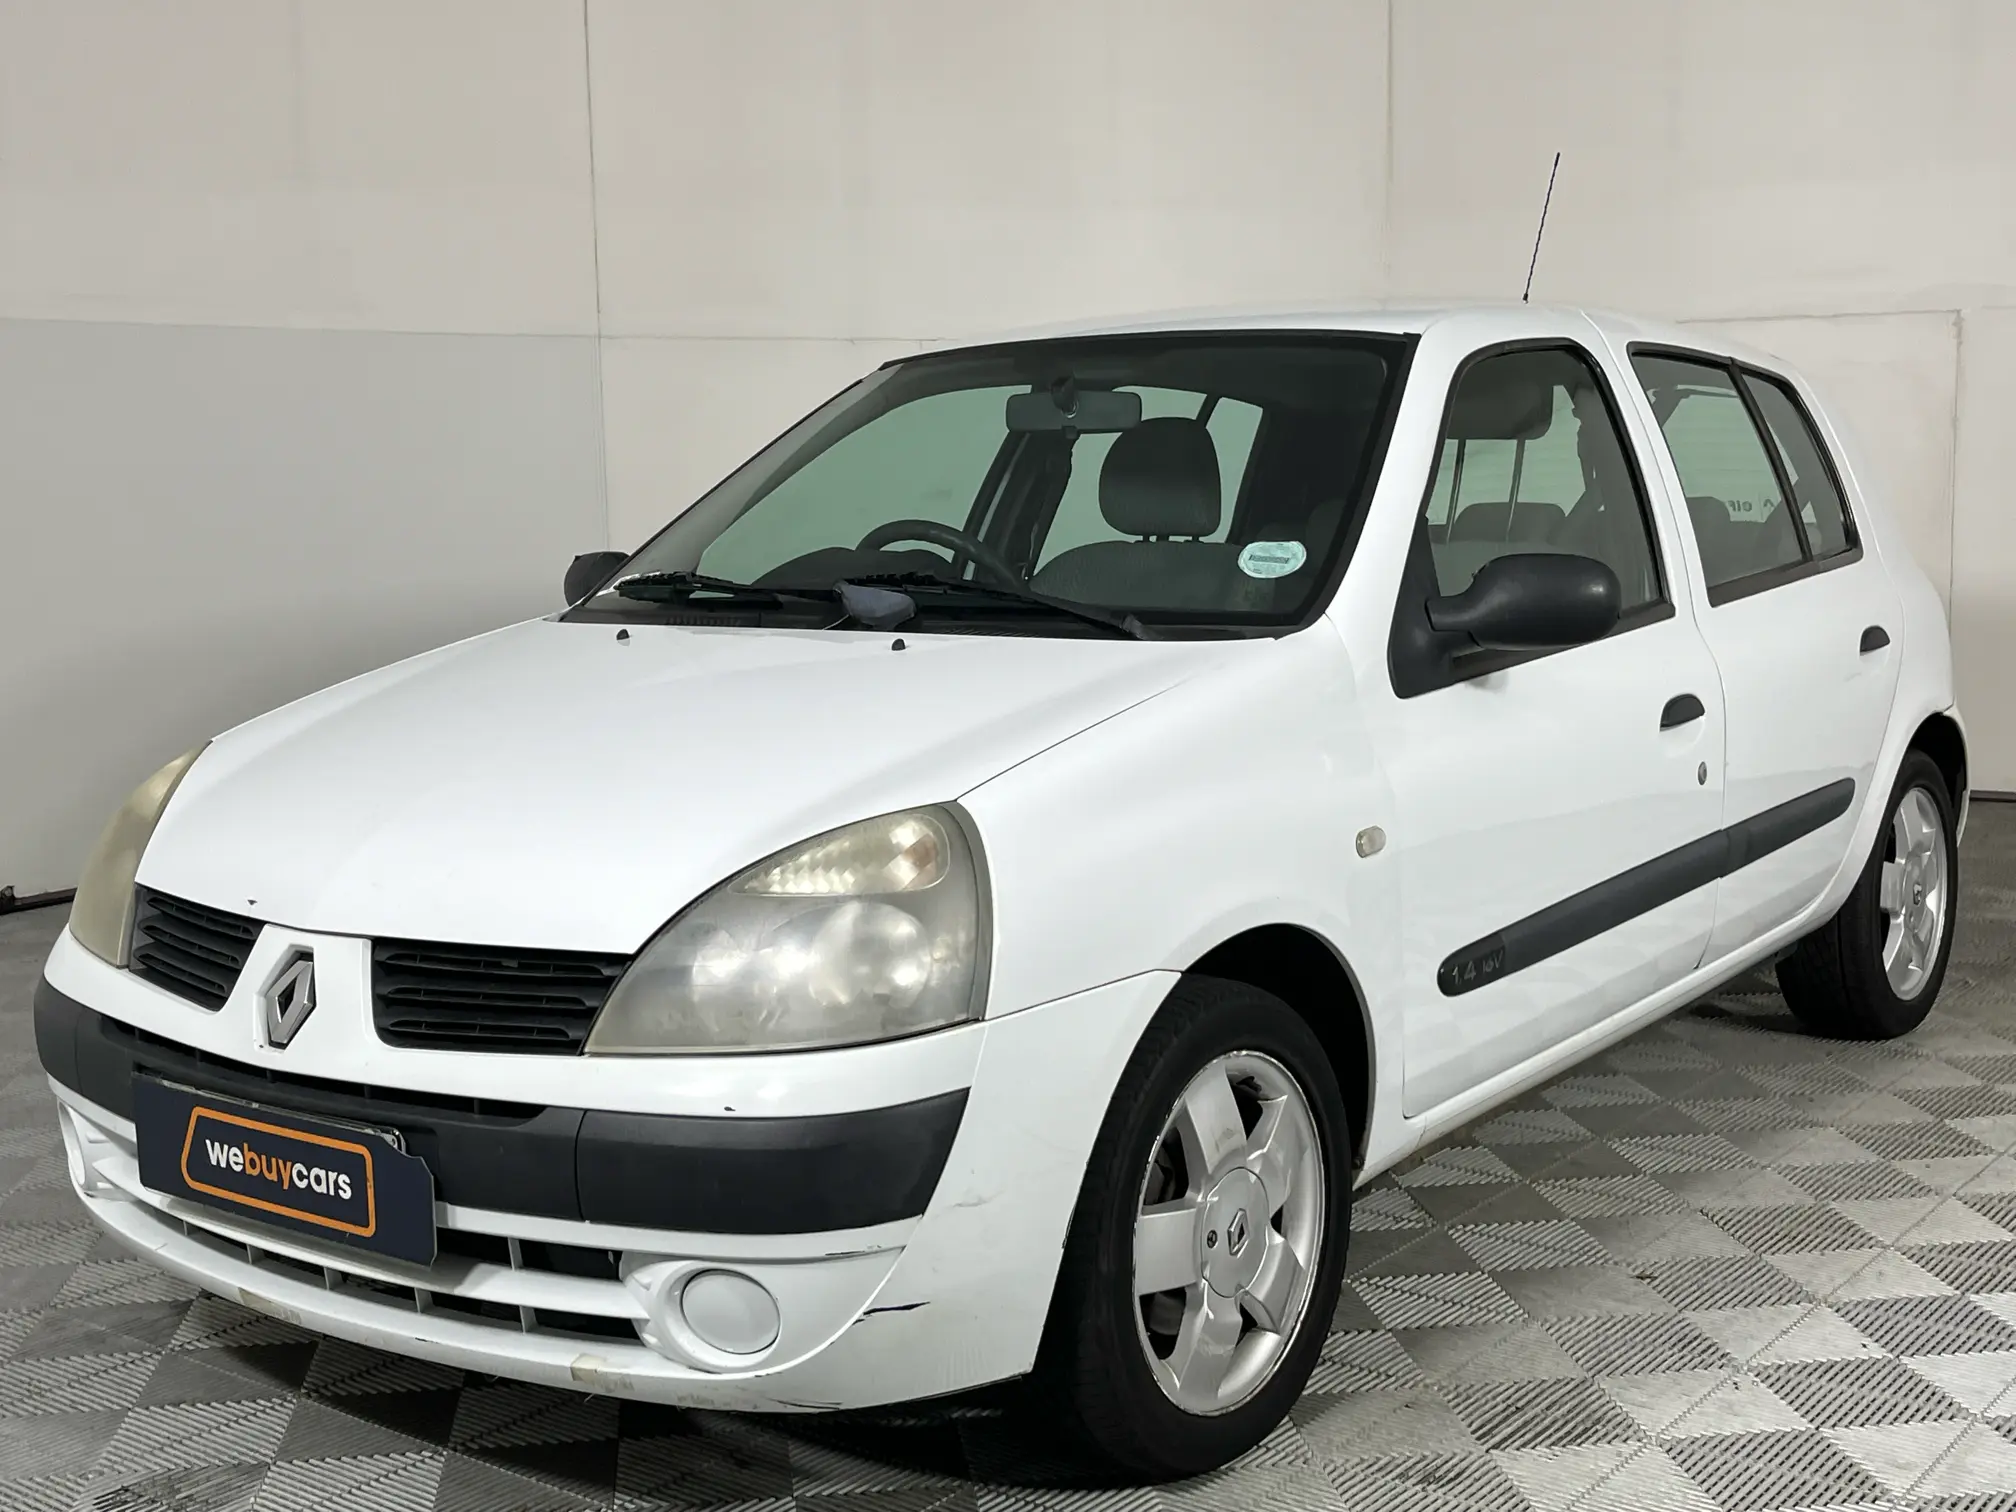 2005 Renault Clio 1.4 Expression